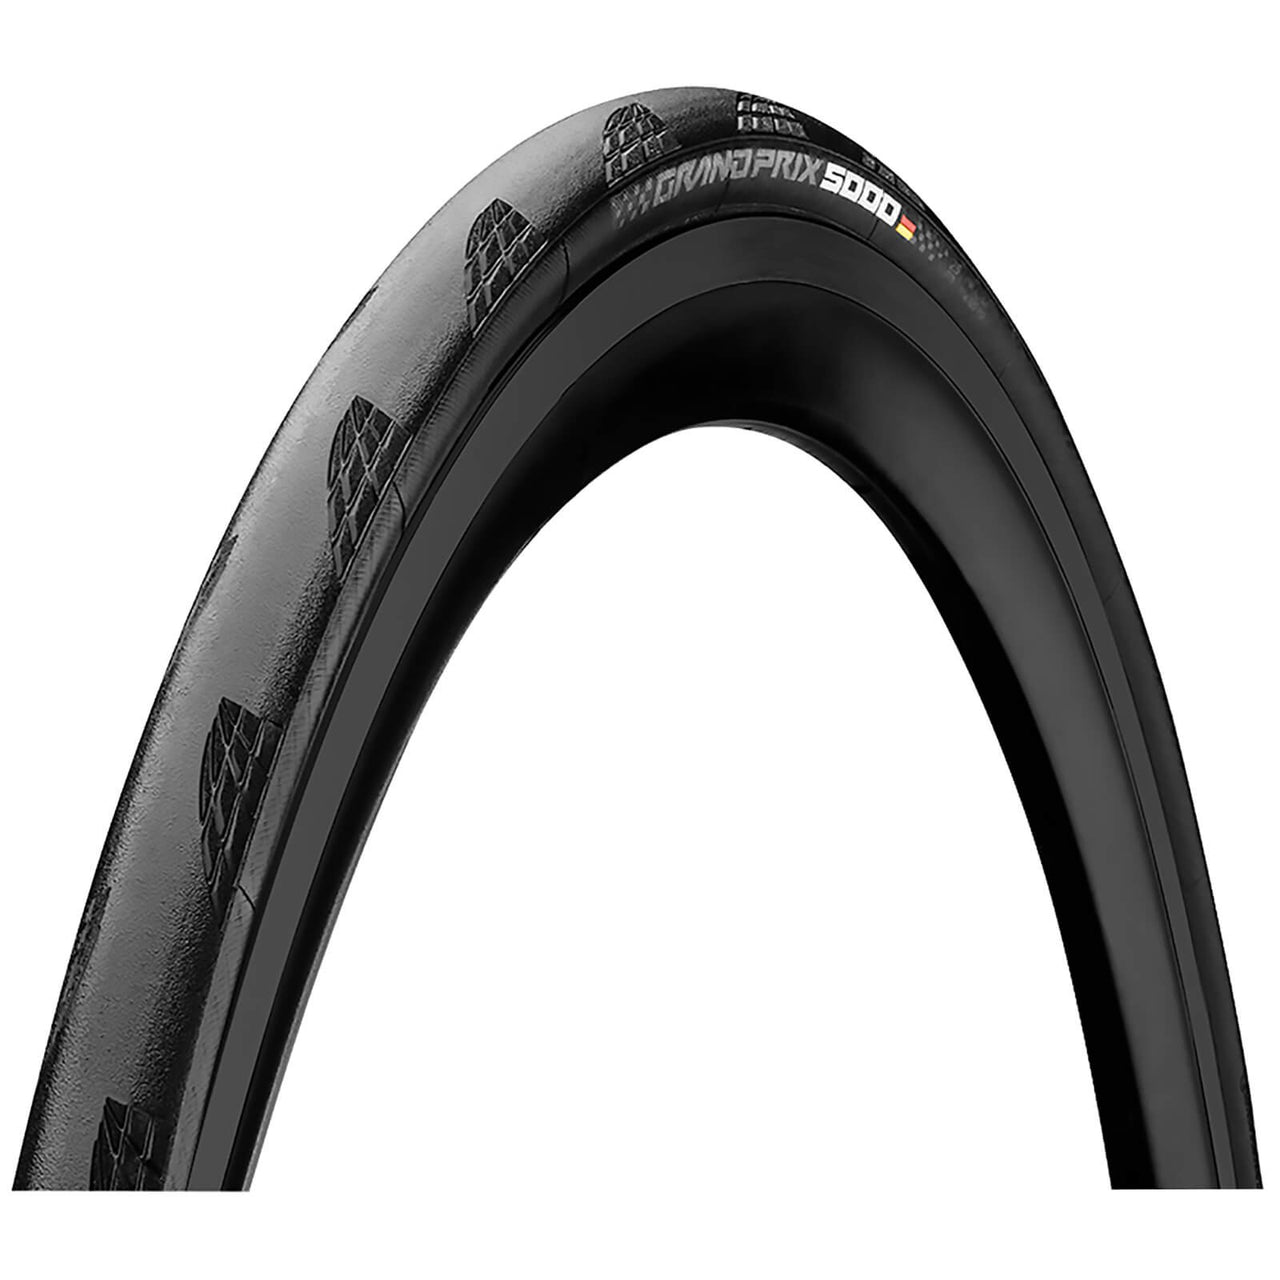 Conti R Gp5000 700x23c Folding Tyre